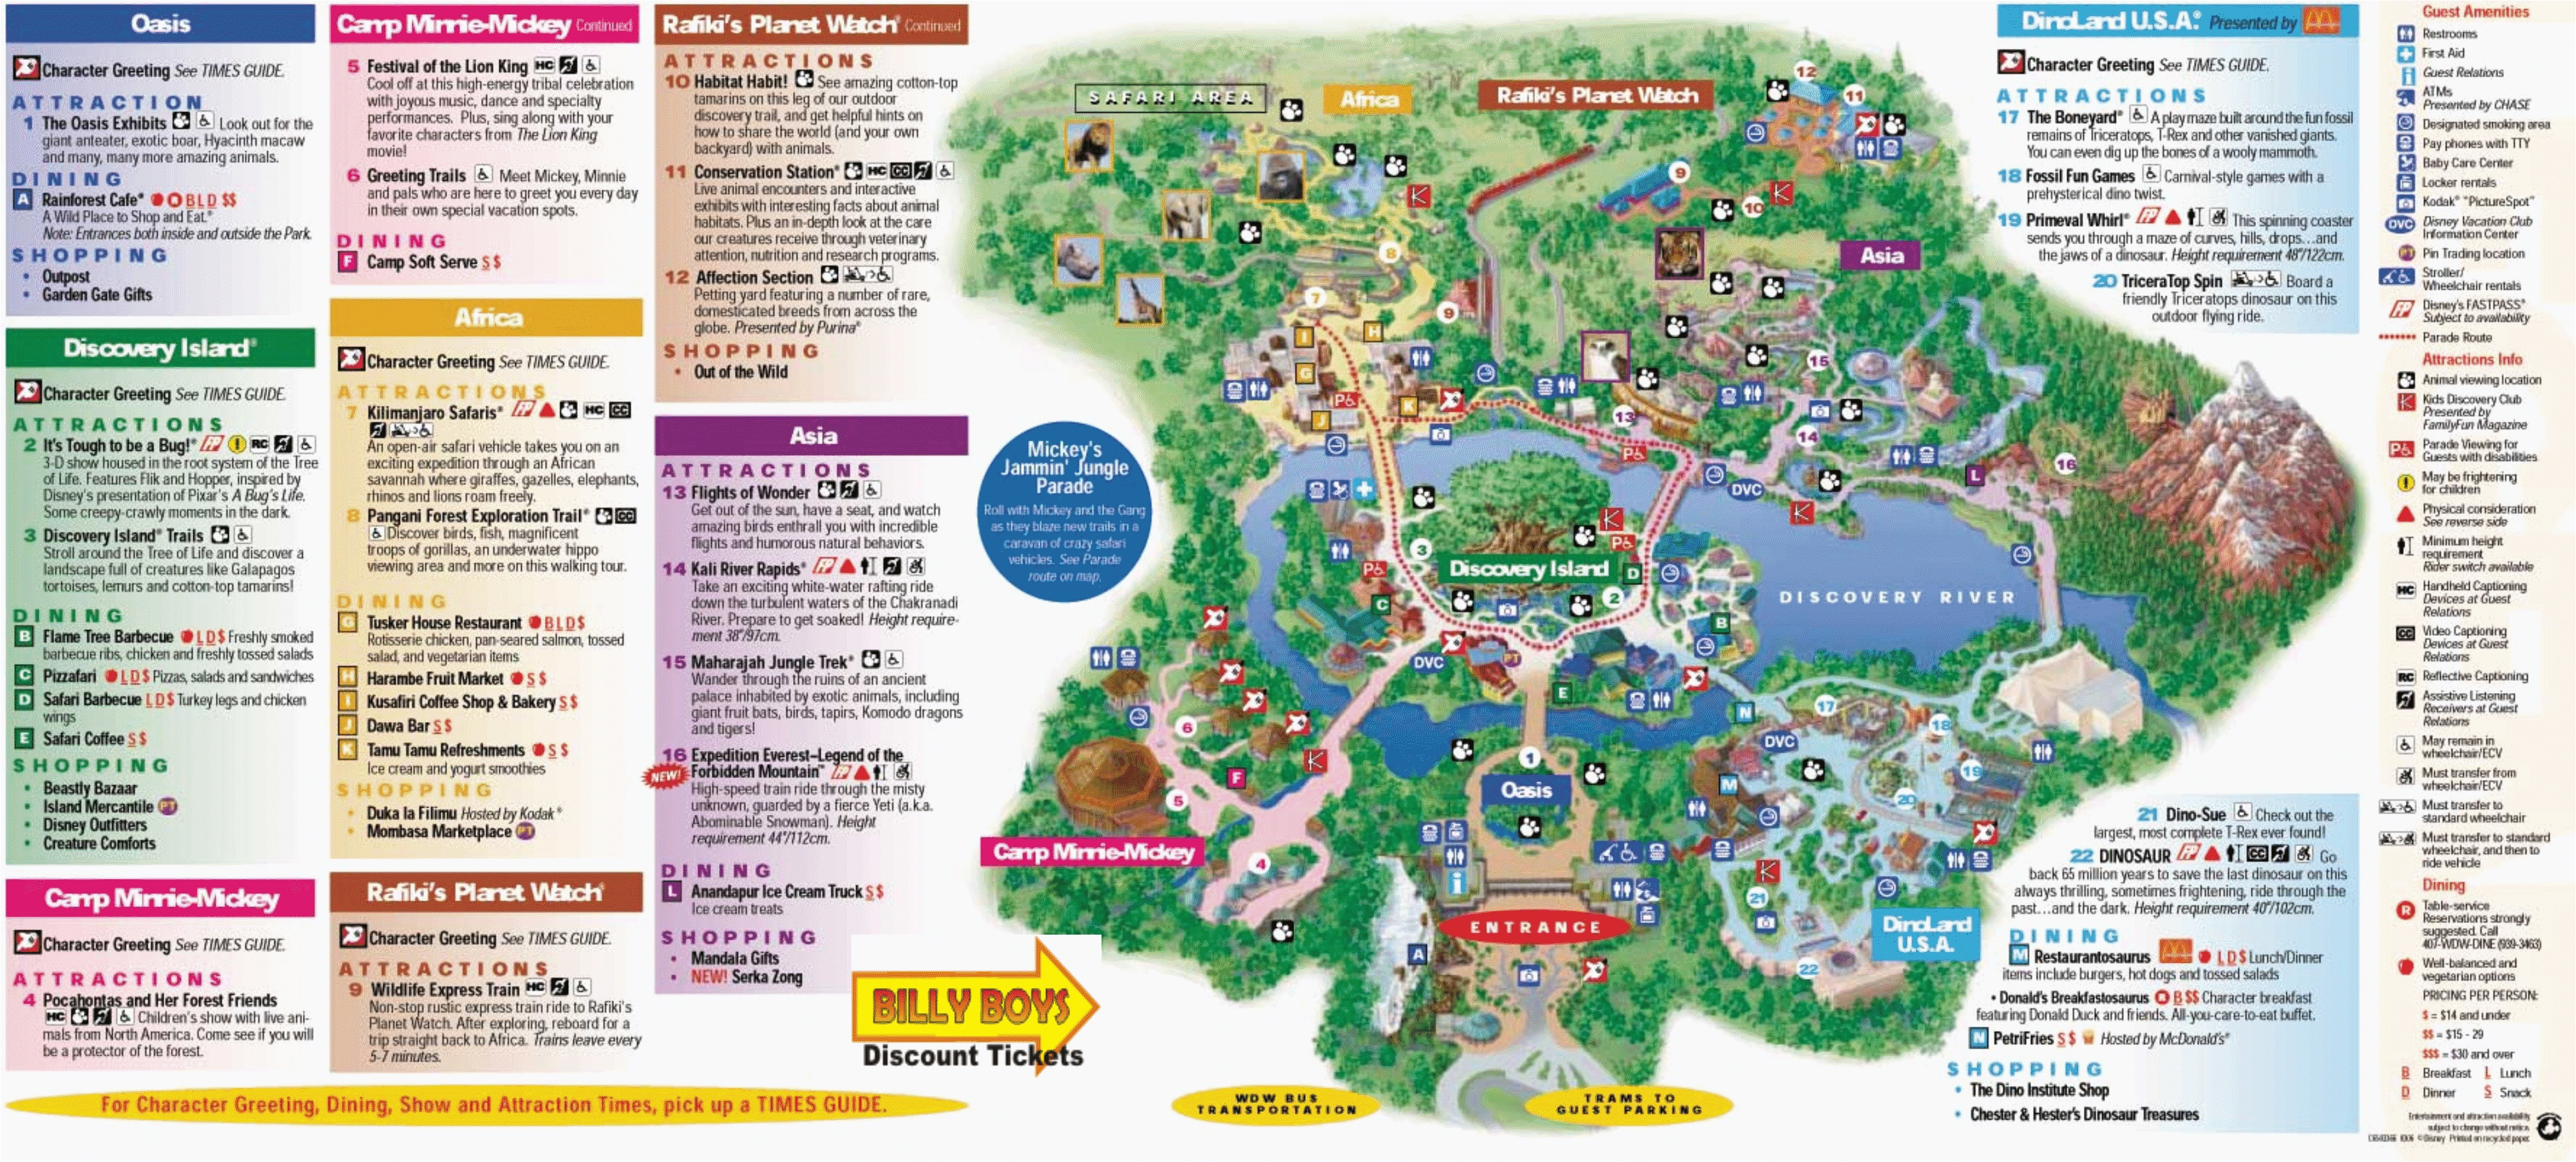 Map Of Disney California Adventure Park Map Disney California Adventure Park Detailed California Awesome Of Map Of Disney California Adventure Park 